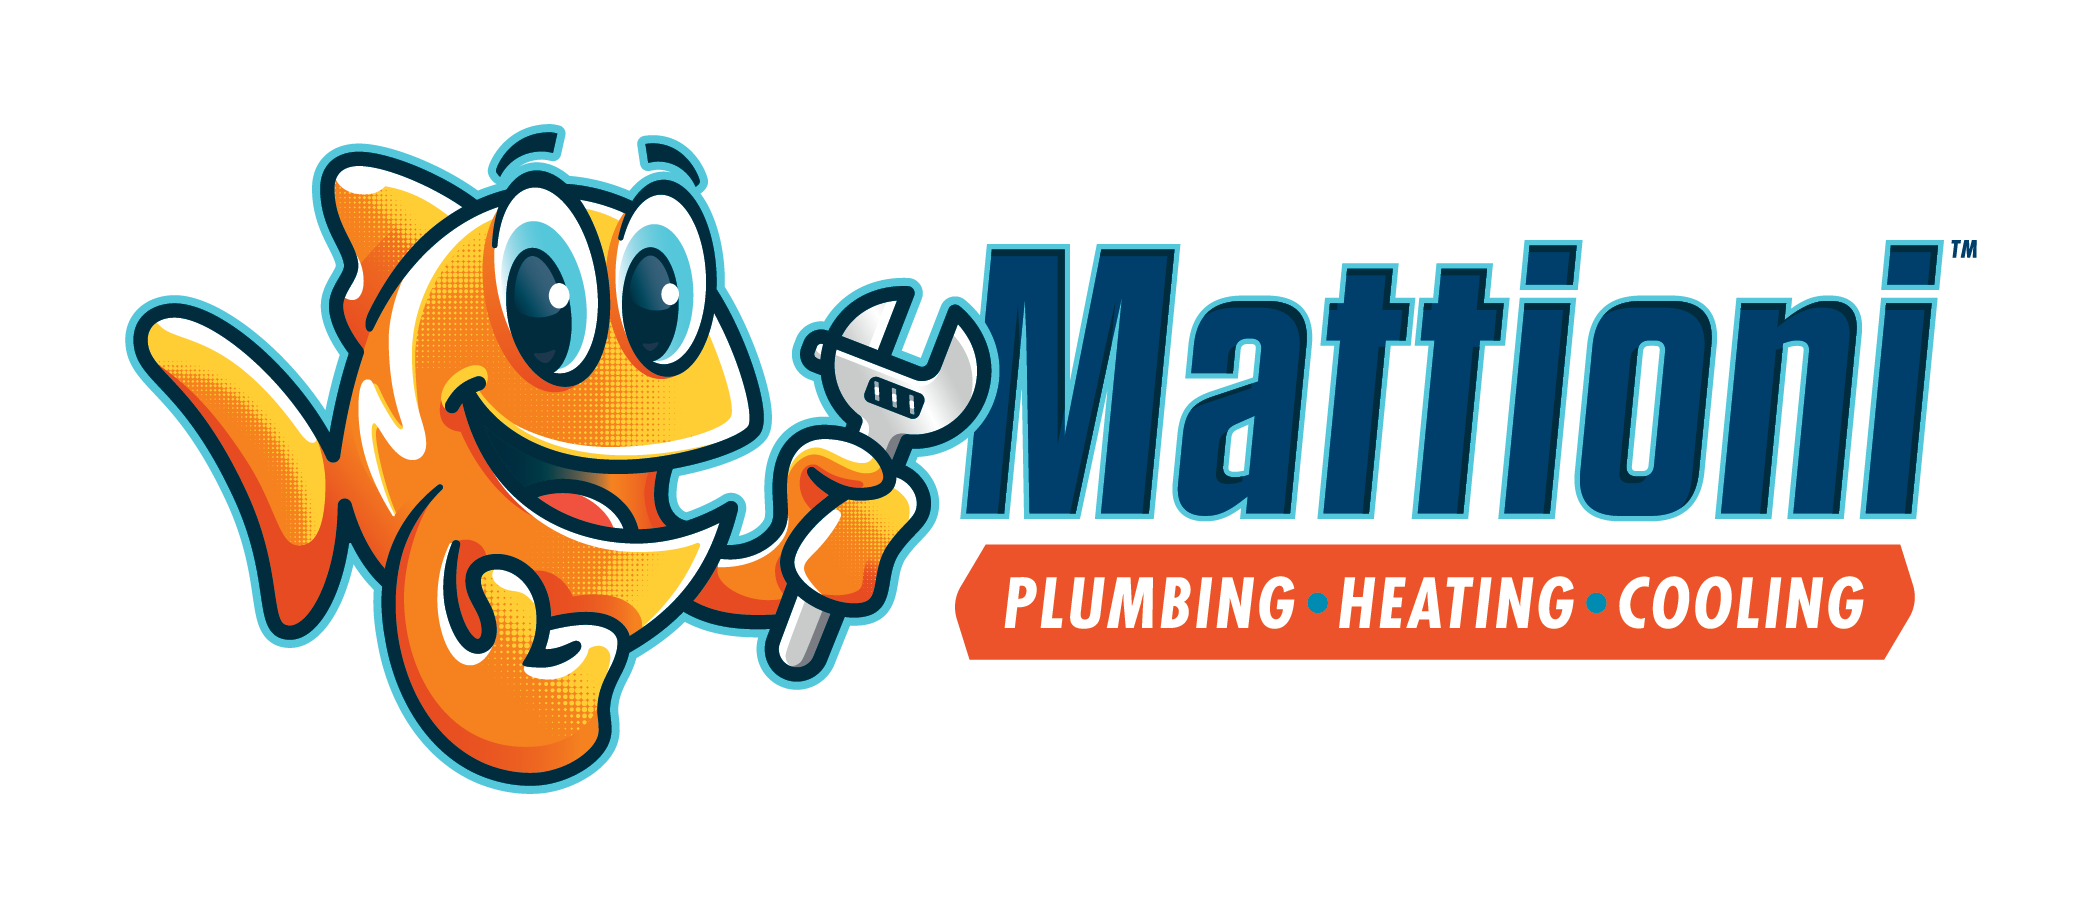 Mattioni Plumbing, Heating & Cooling Company Logo